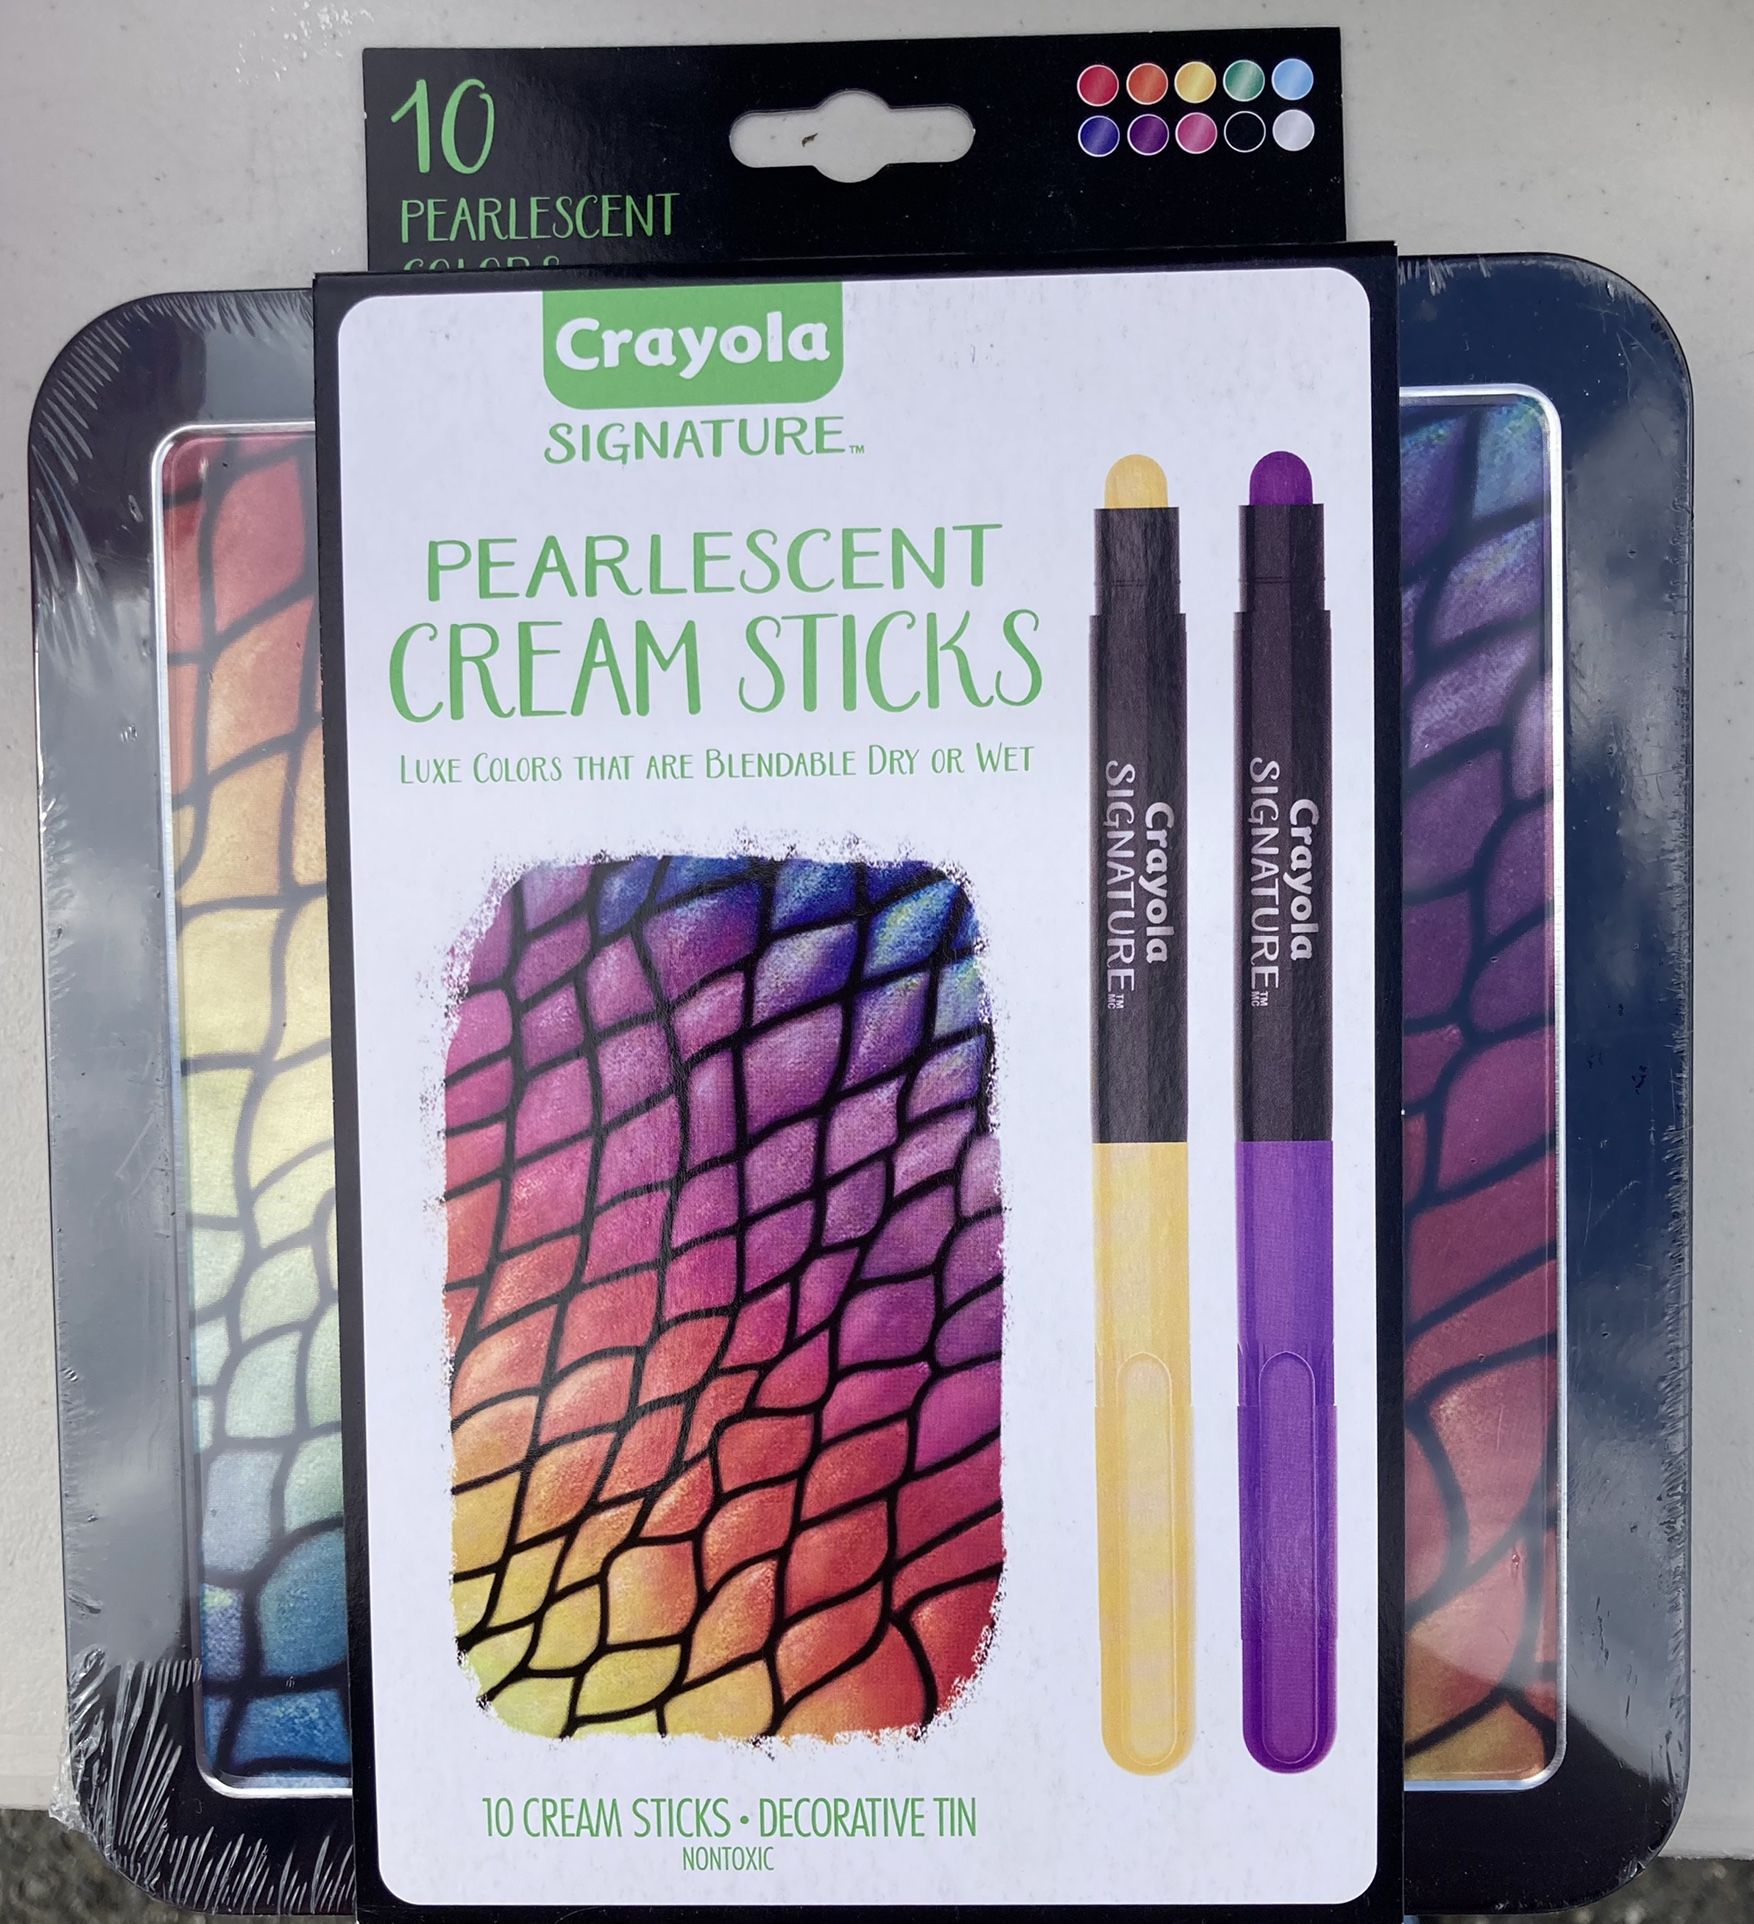 Crayola - 10 Crayola Signature Pearlescent Cream Sticks (Luxe Colors) New